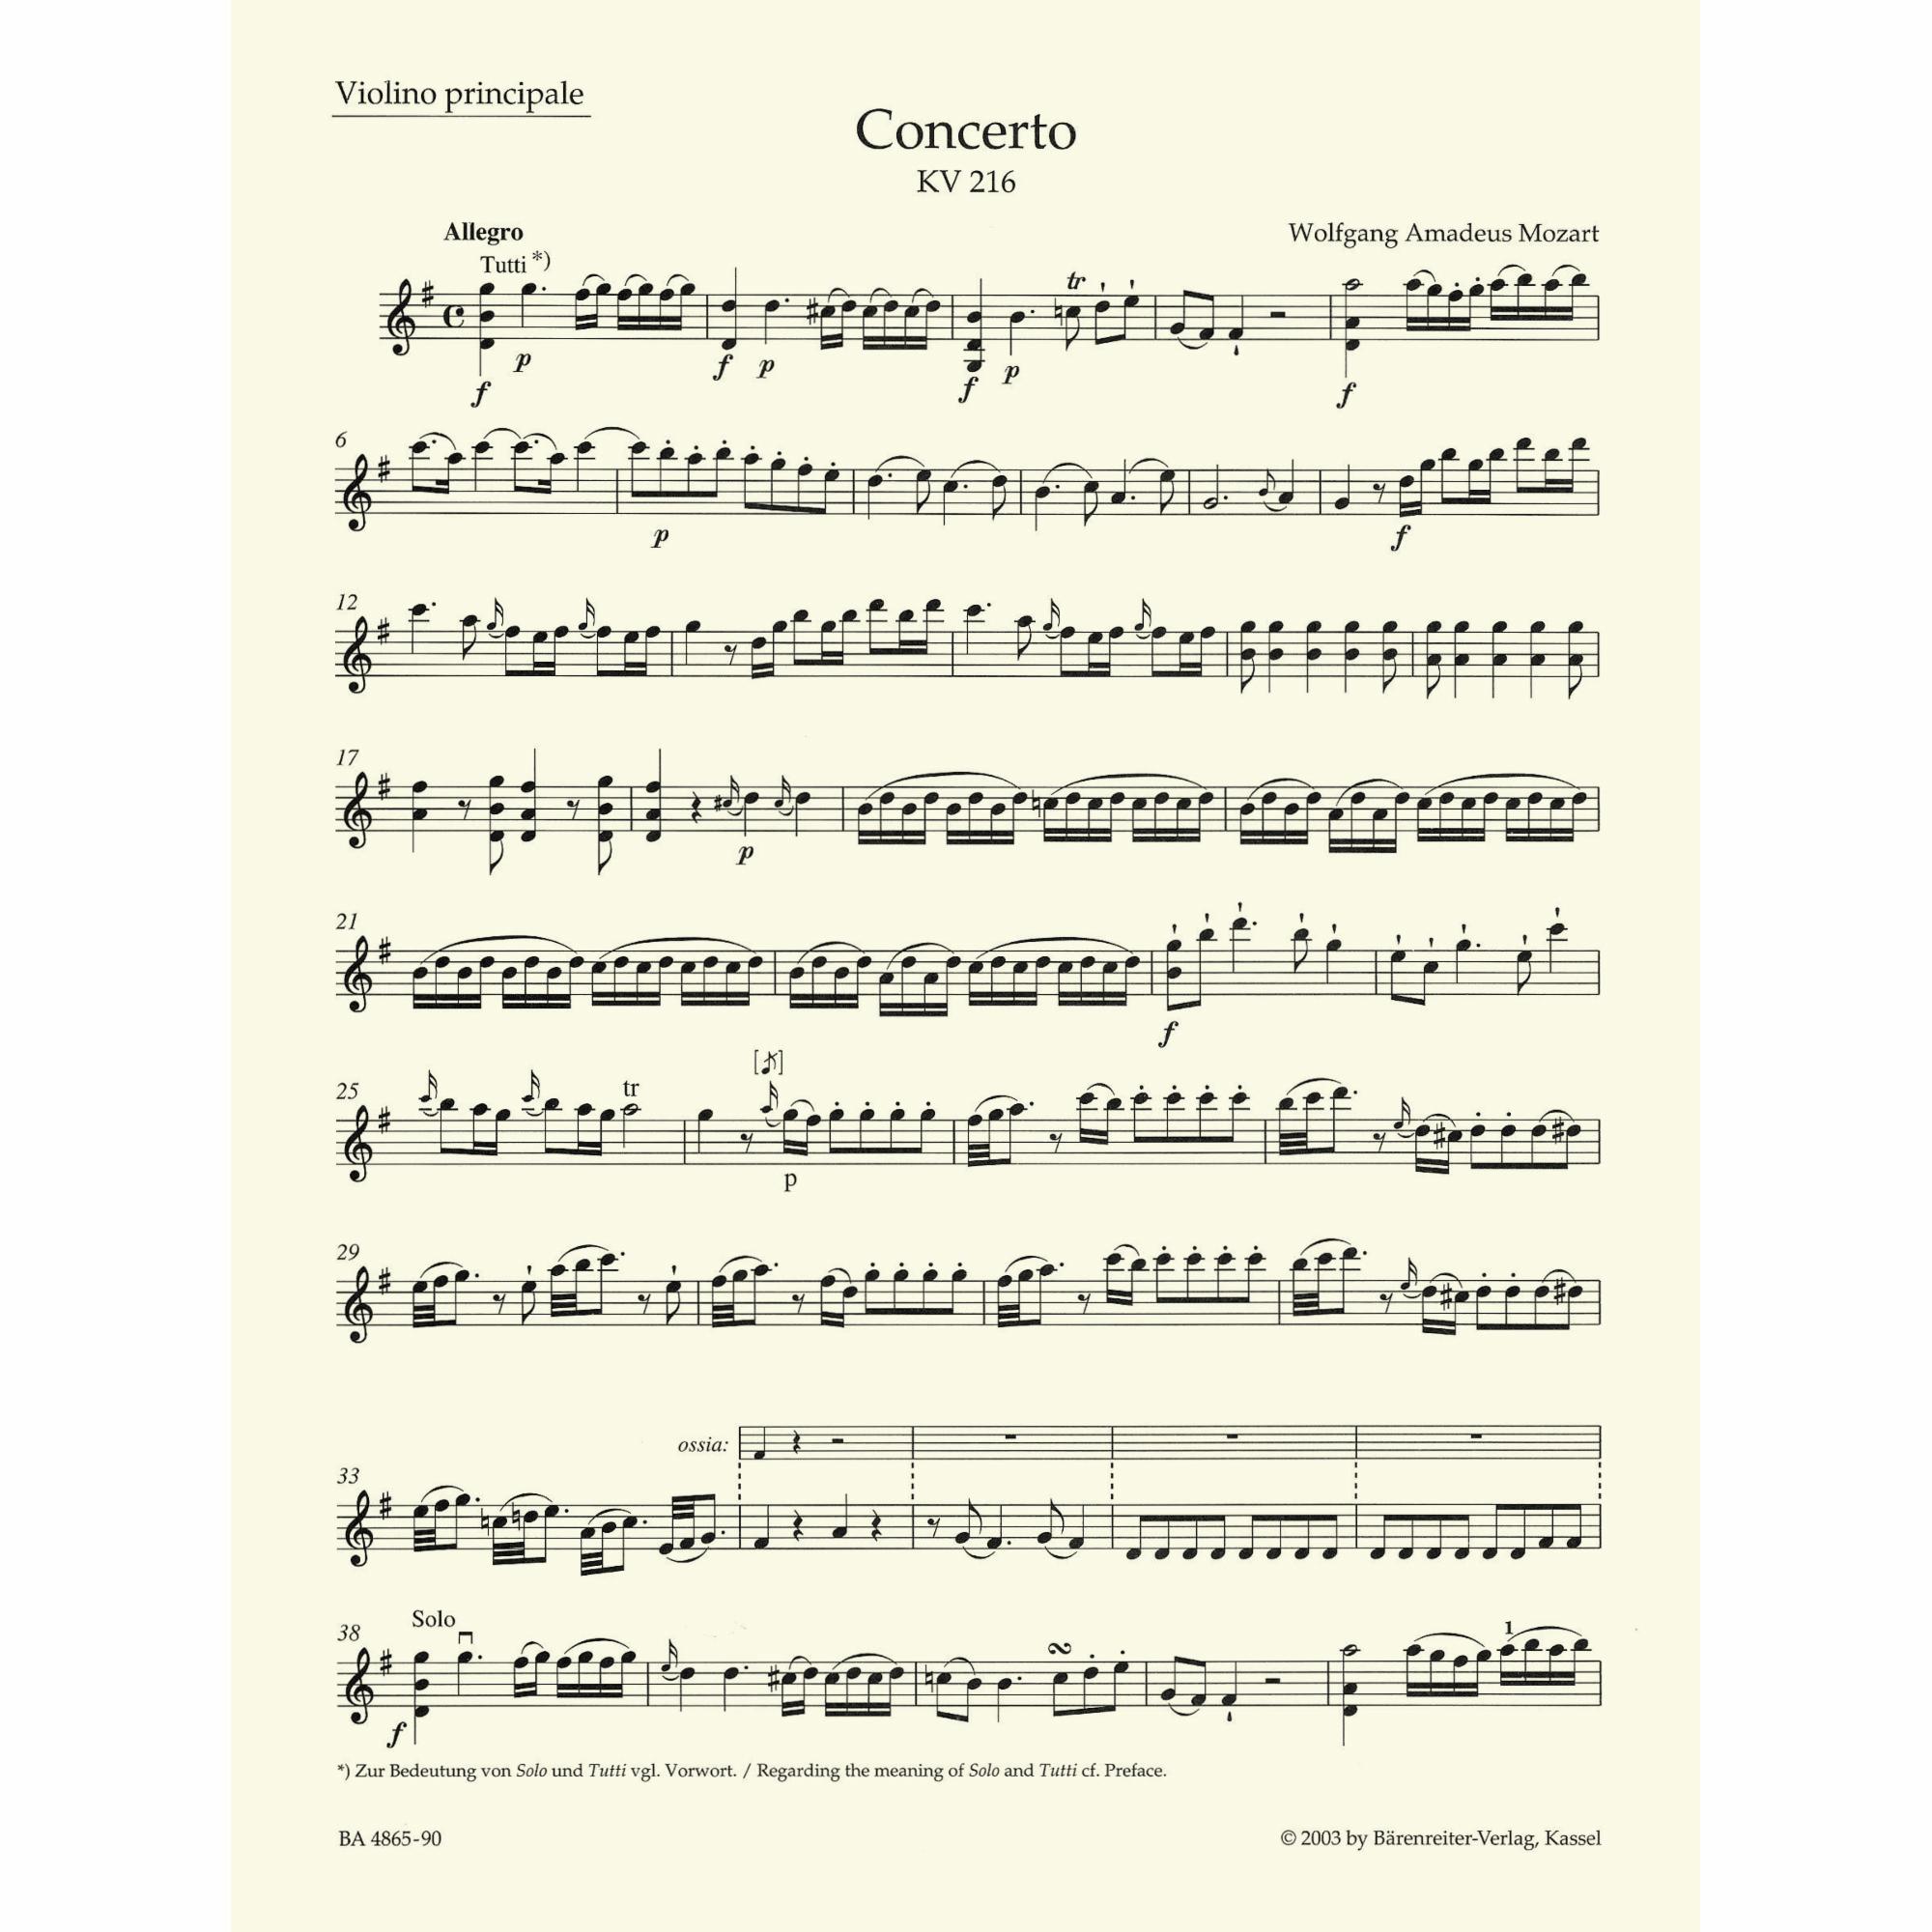 Sample: Marked Violin Part